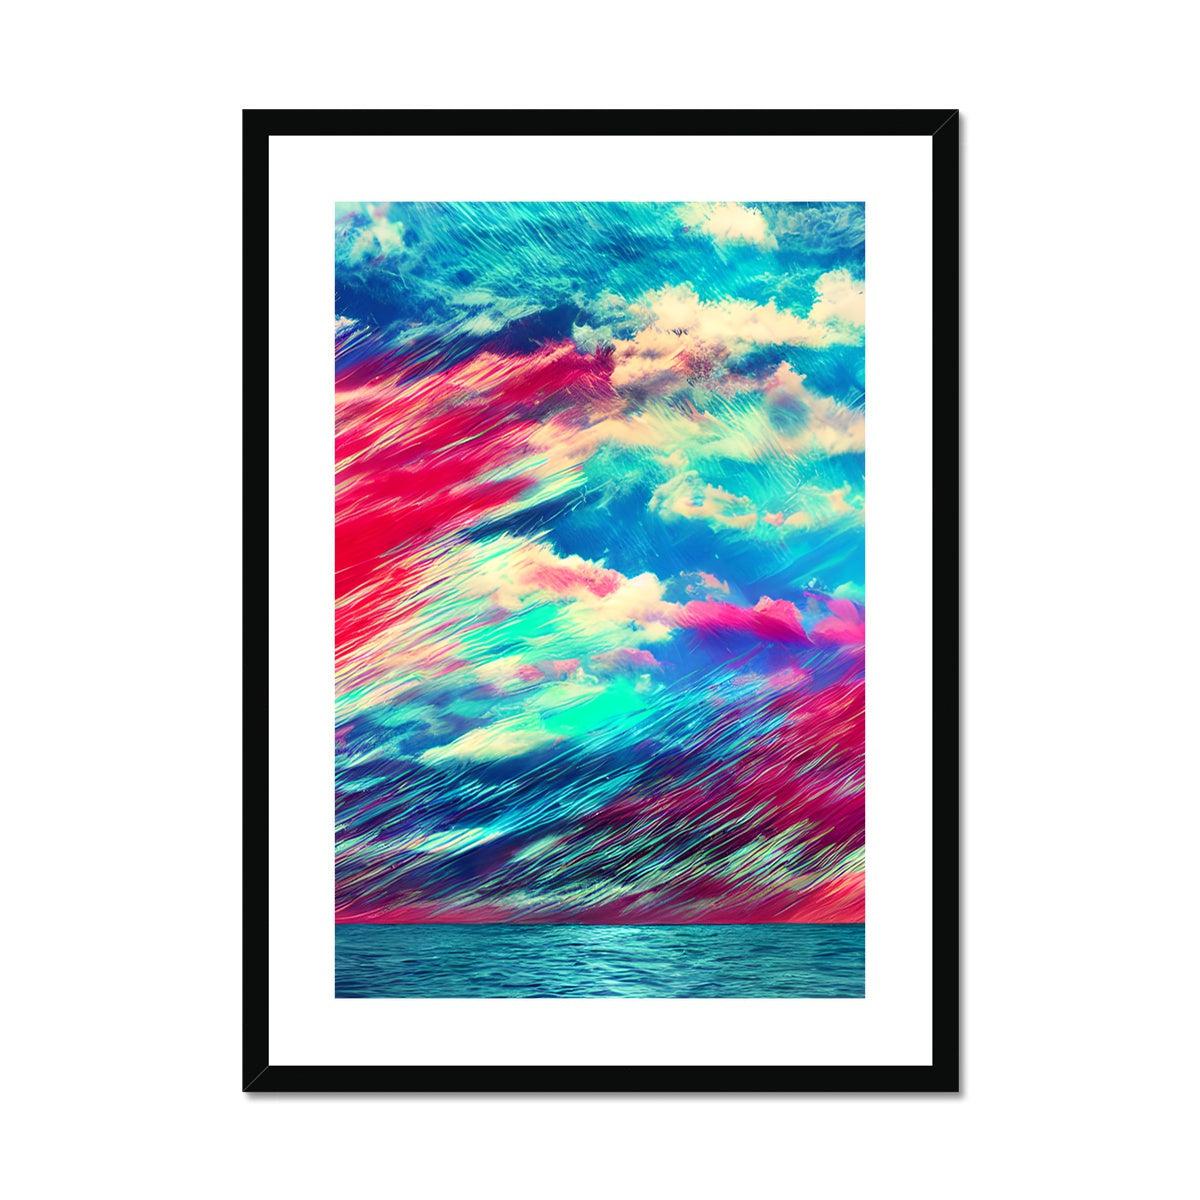 Stormy Seas Framed & Mounted Print